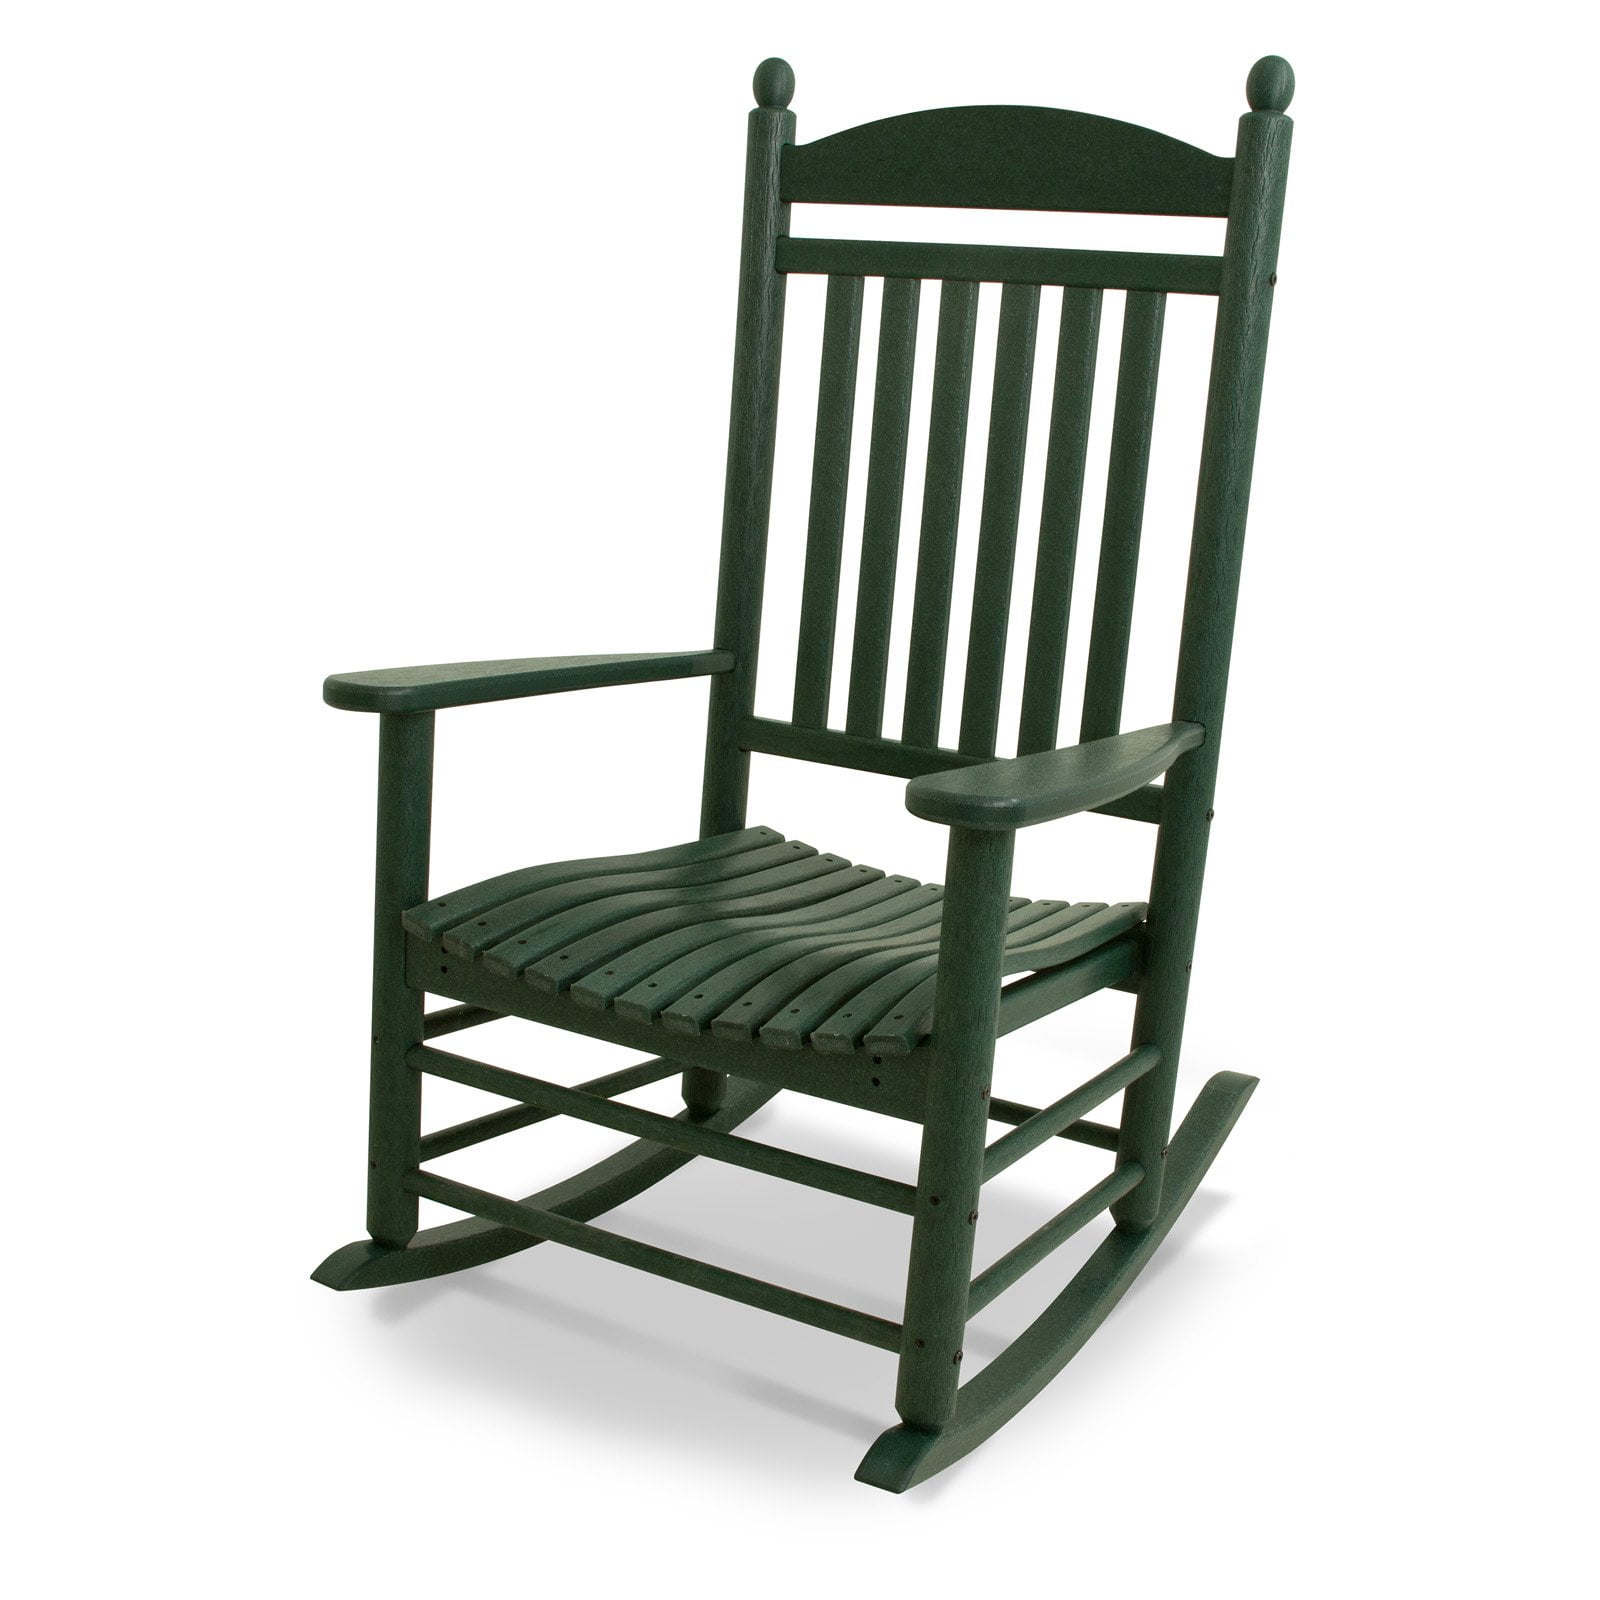 POLYWOOD® Jefferson Recycled Plastic Rocking Chair - Walmart.com -
Walmart.com